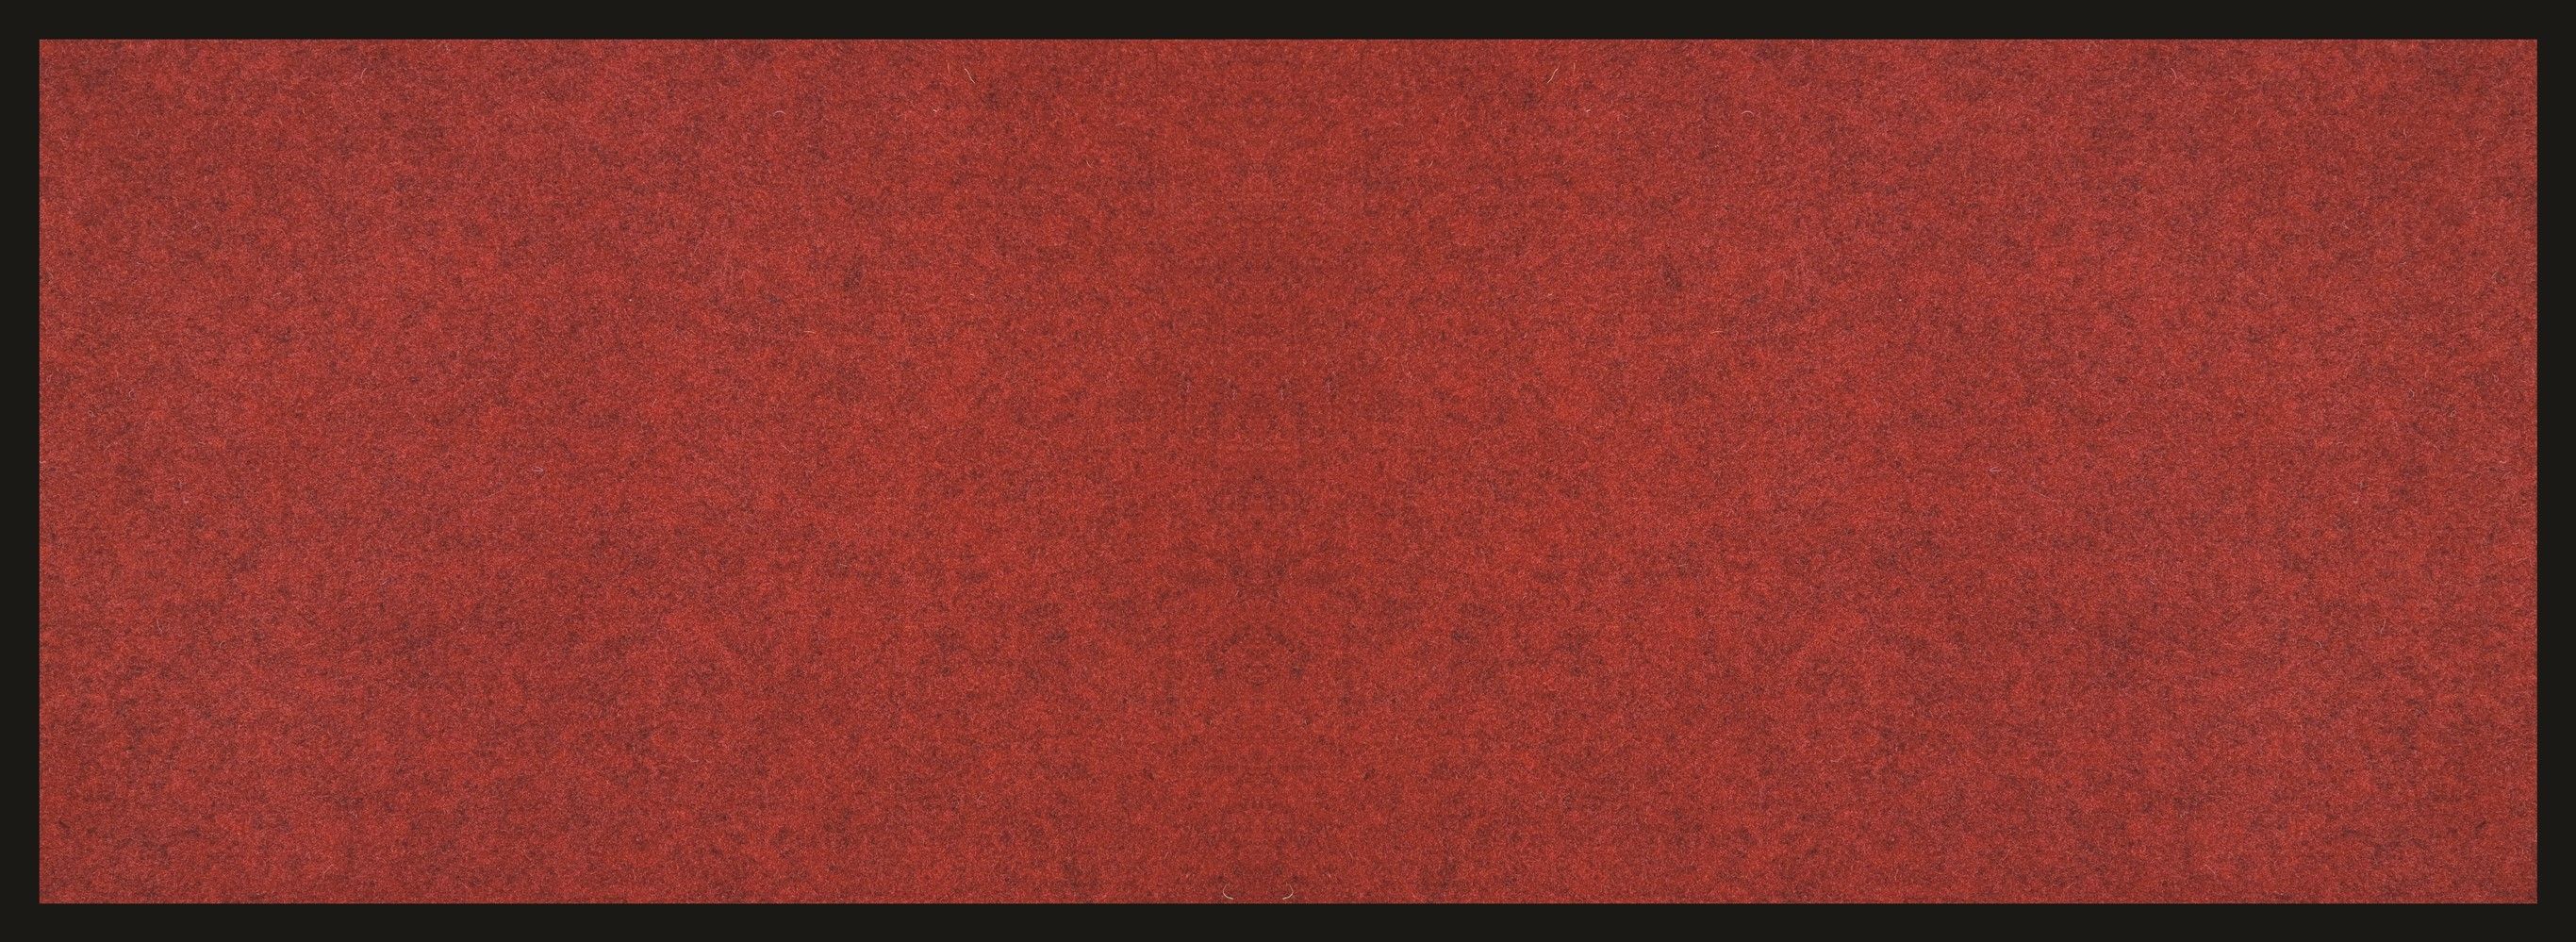 Tapis paillasson absorbant prima rouge 60x160cm